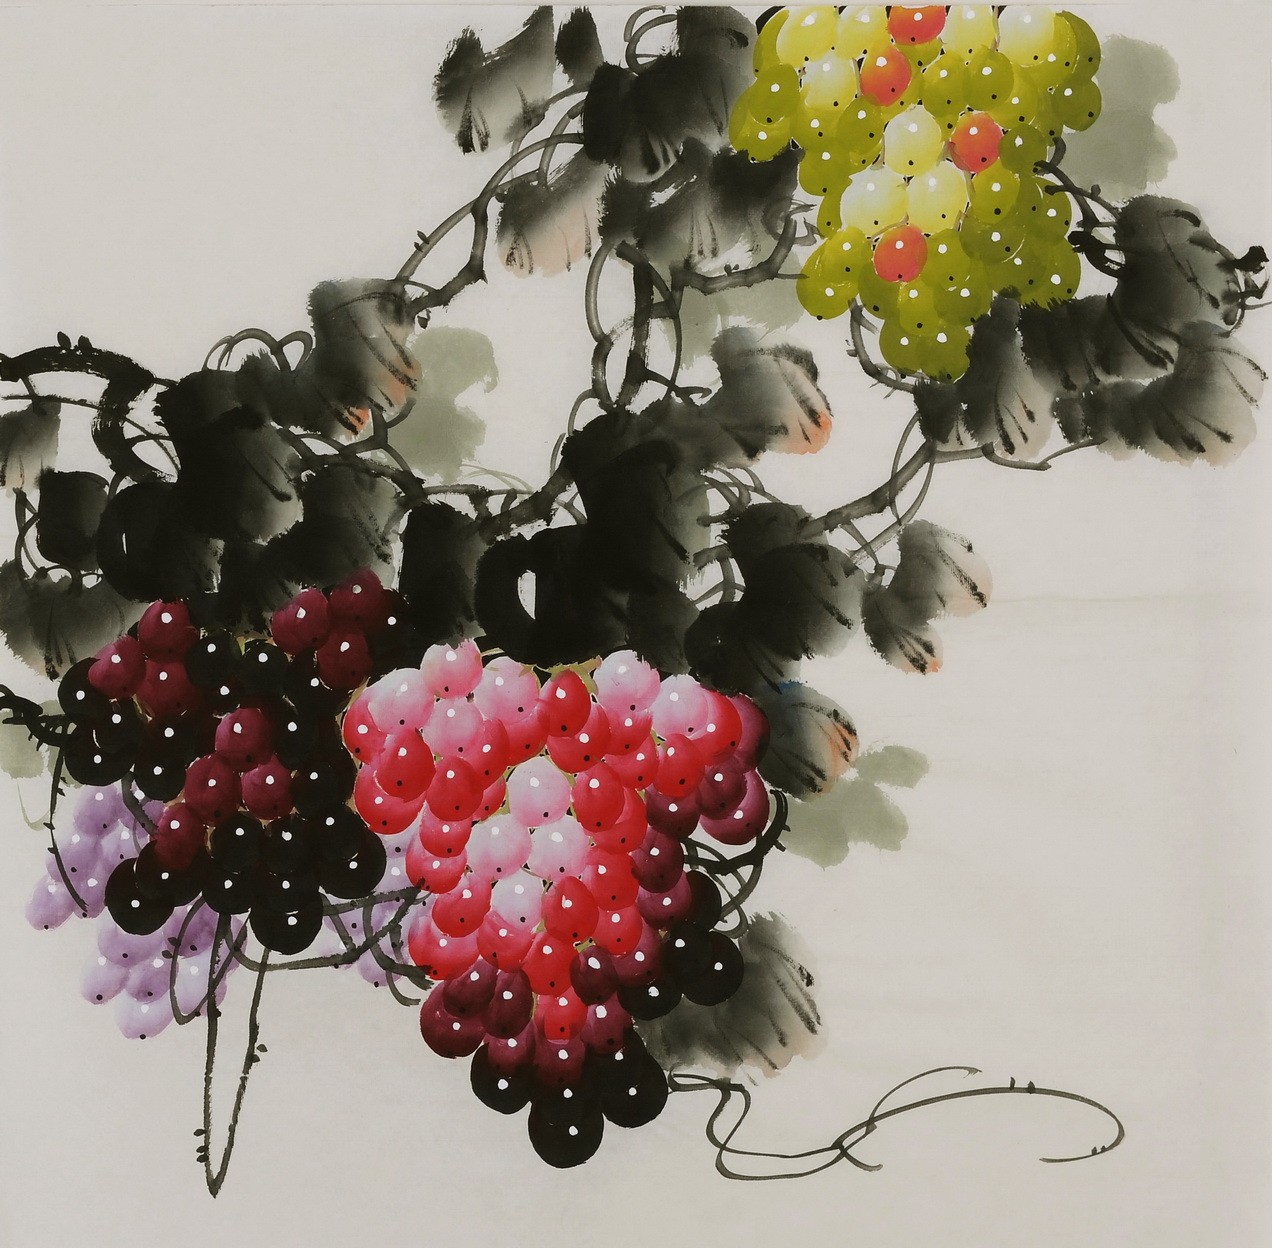 Grapes - CNAG005856